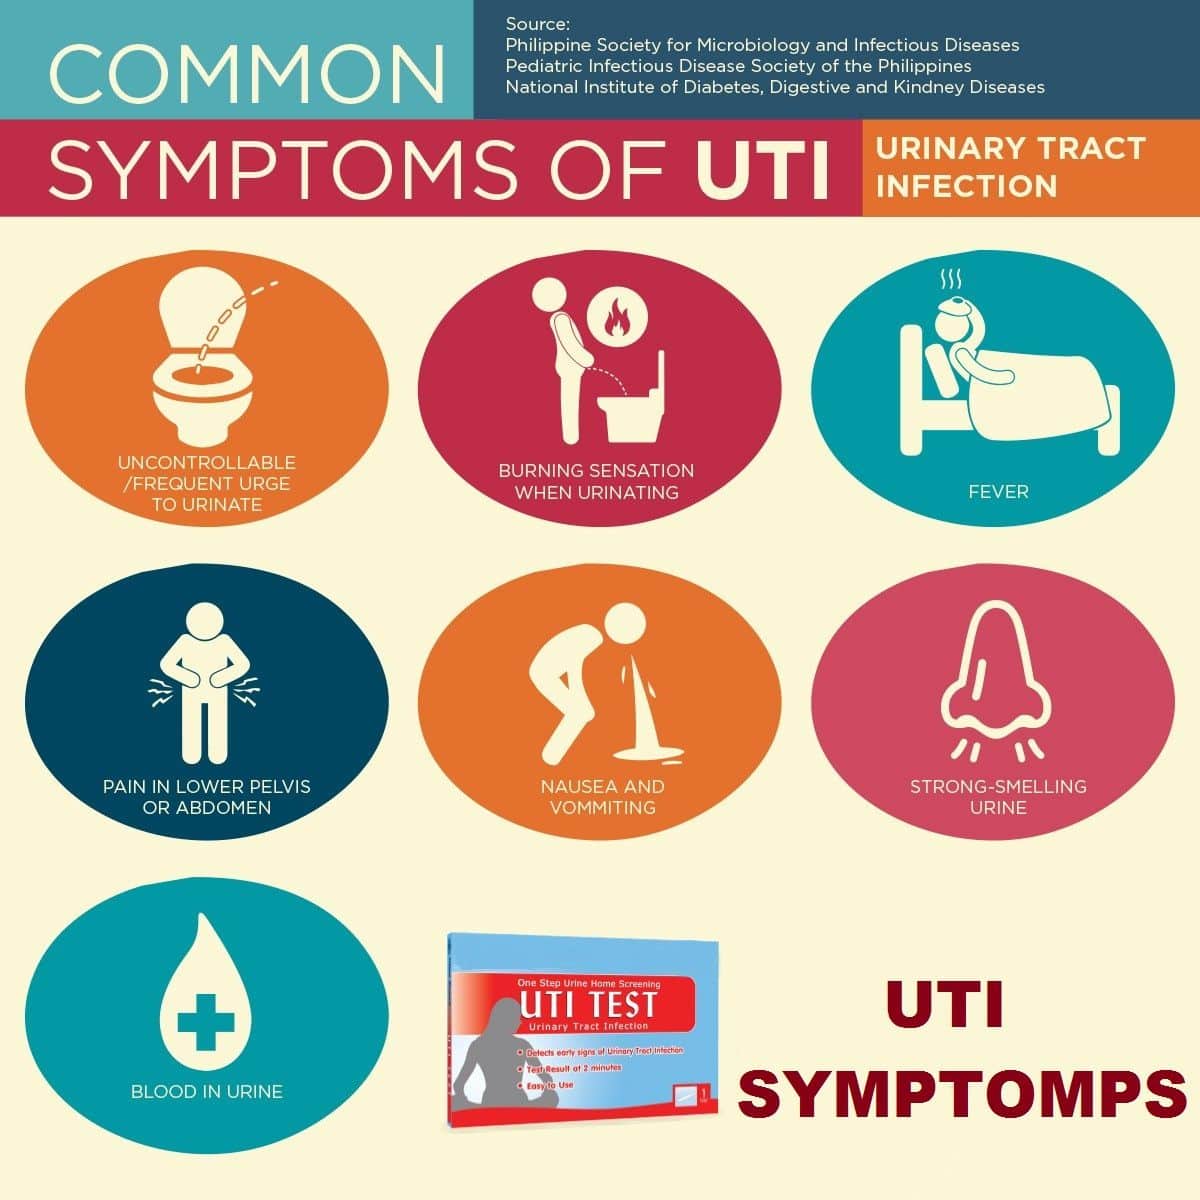 Pin on UTI symptoms